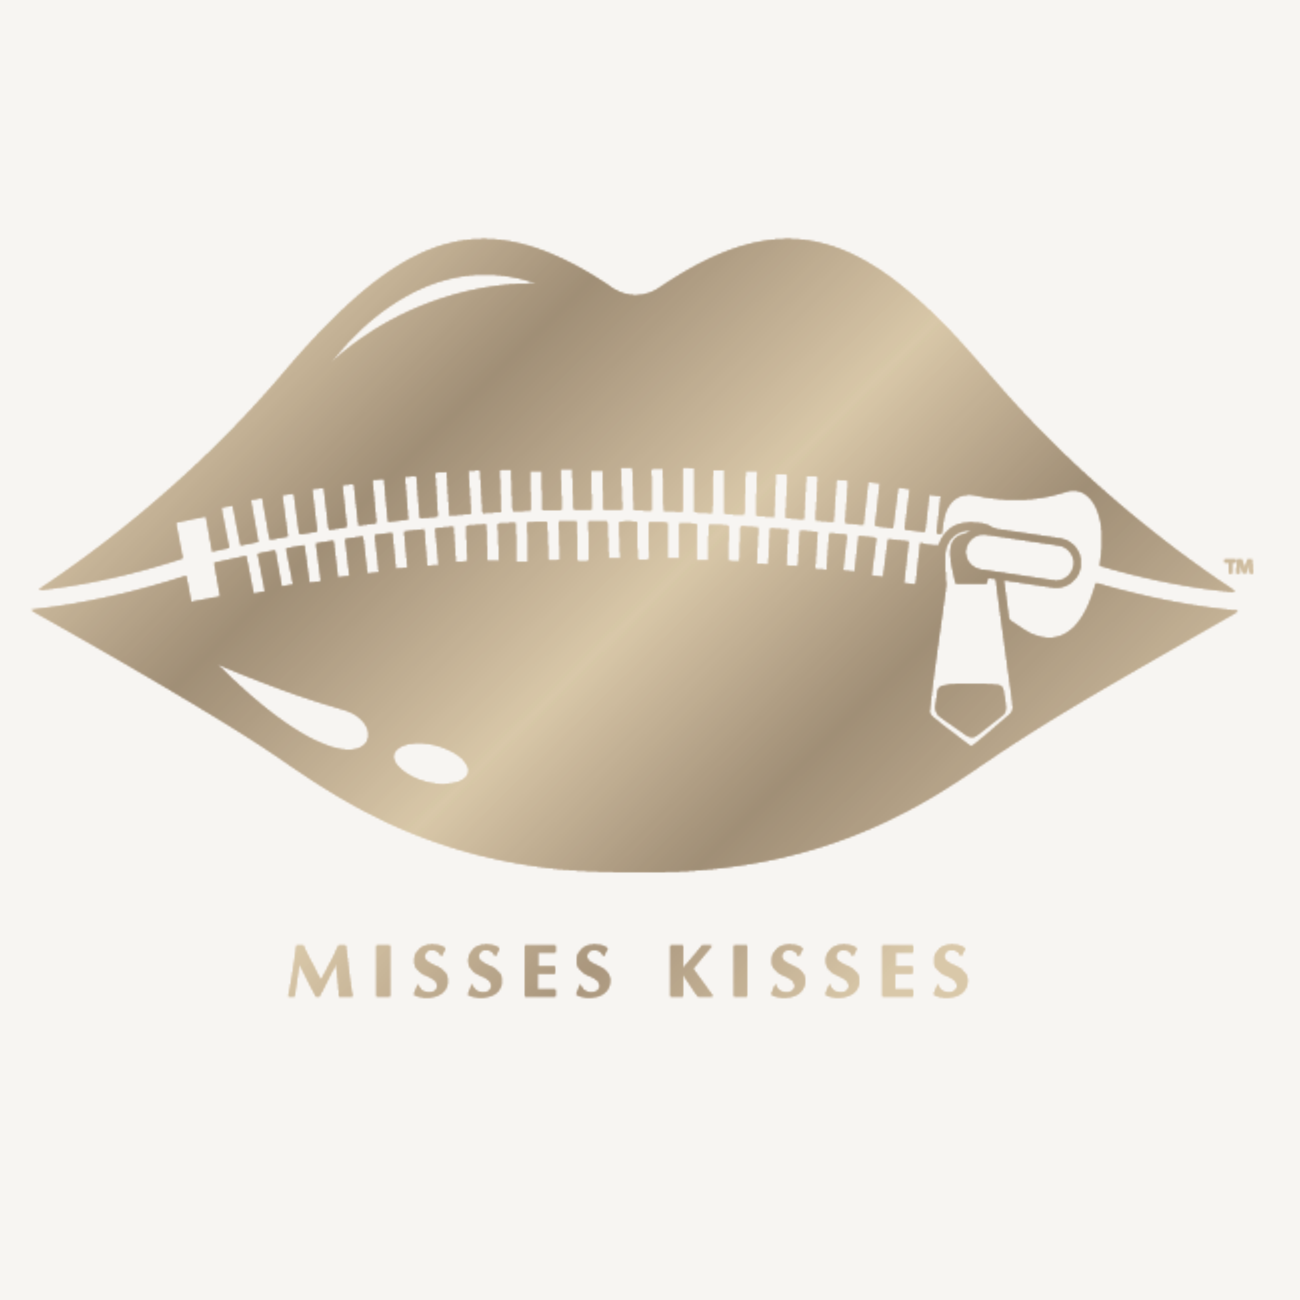 Misses Kisses Customer Reviews